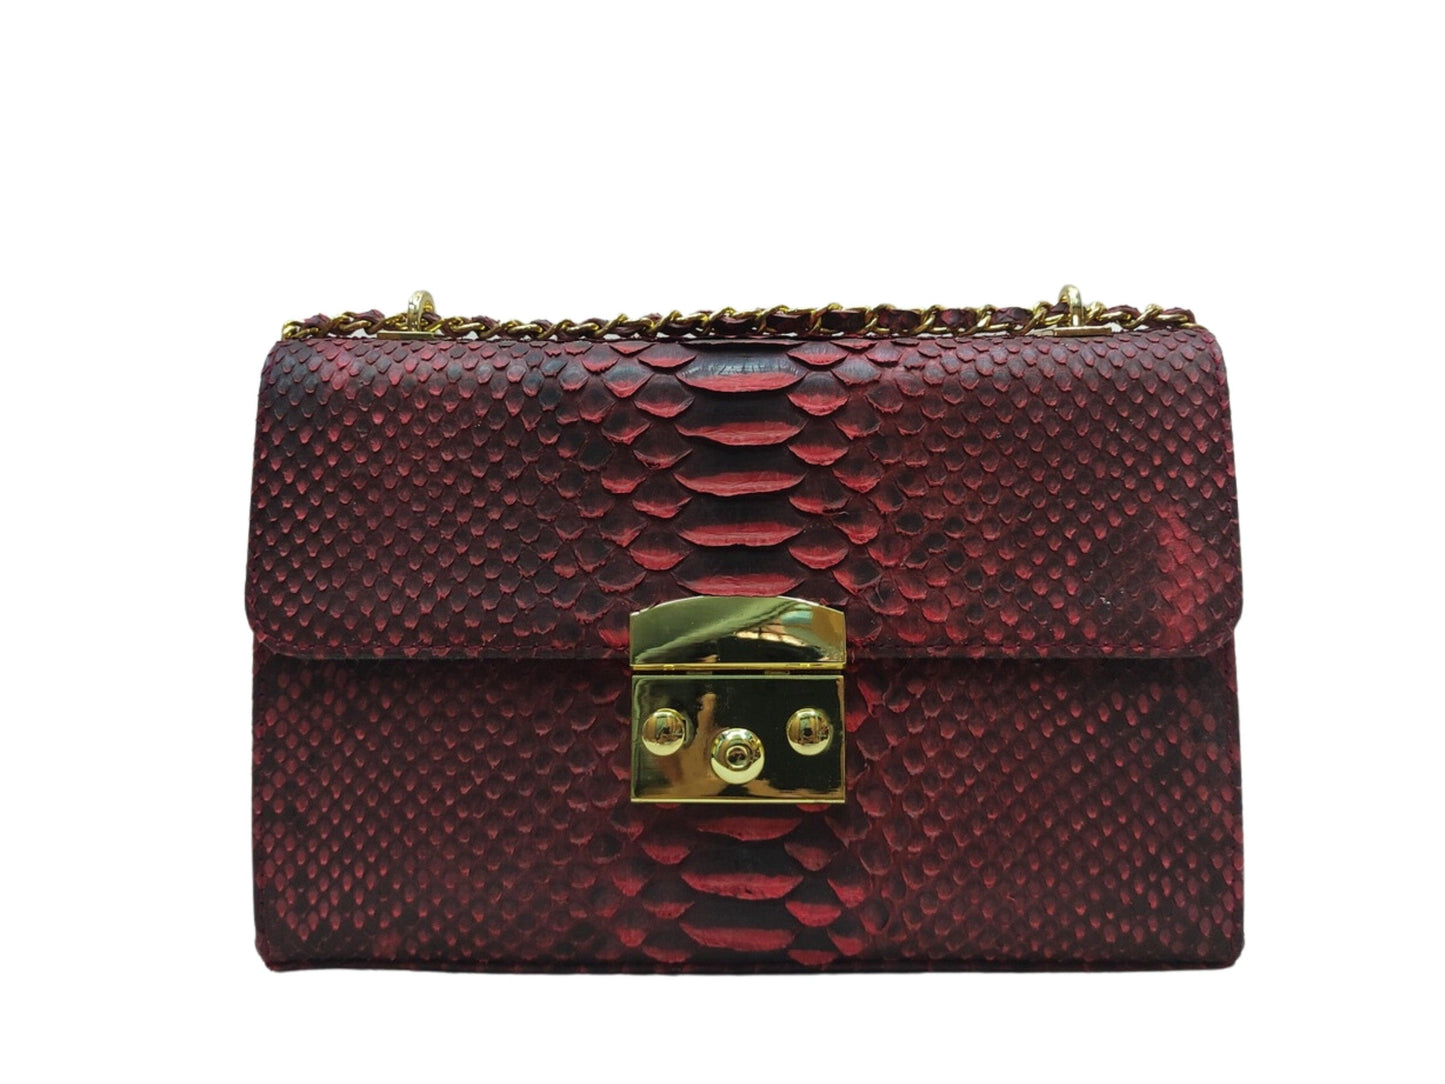 Python Bags Snakeskin Python Small Handbag Red Python Jacket by LFM Fashion